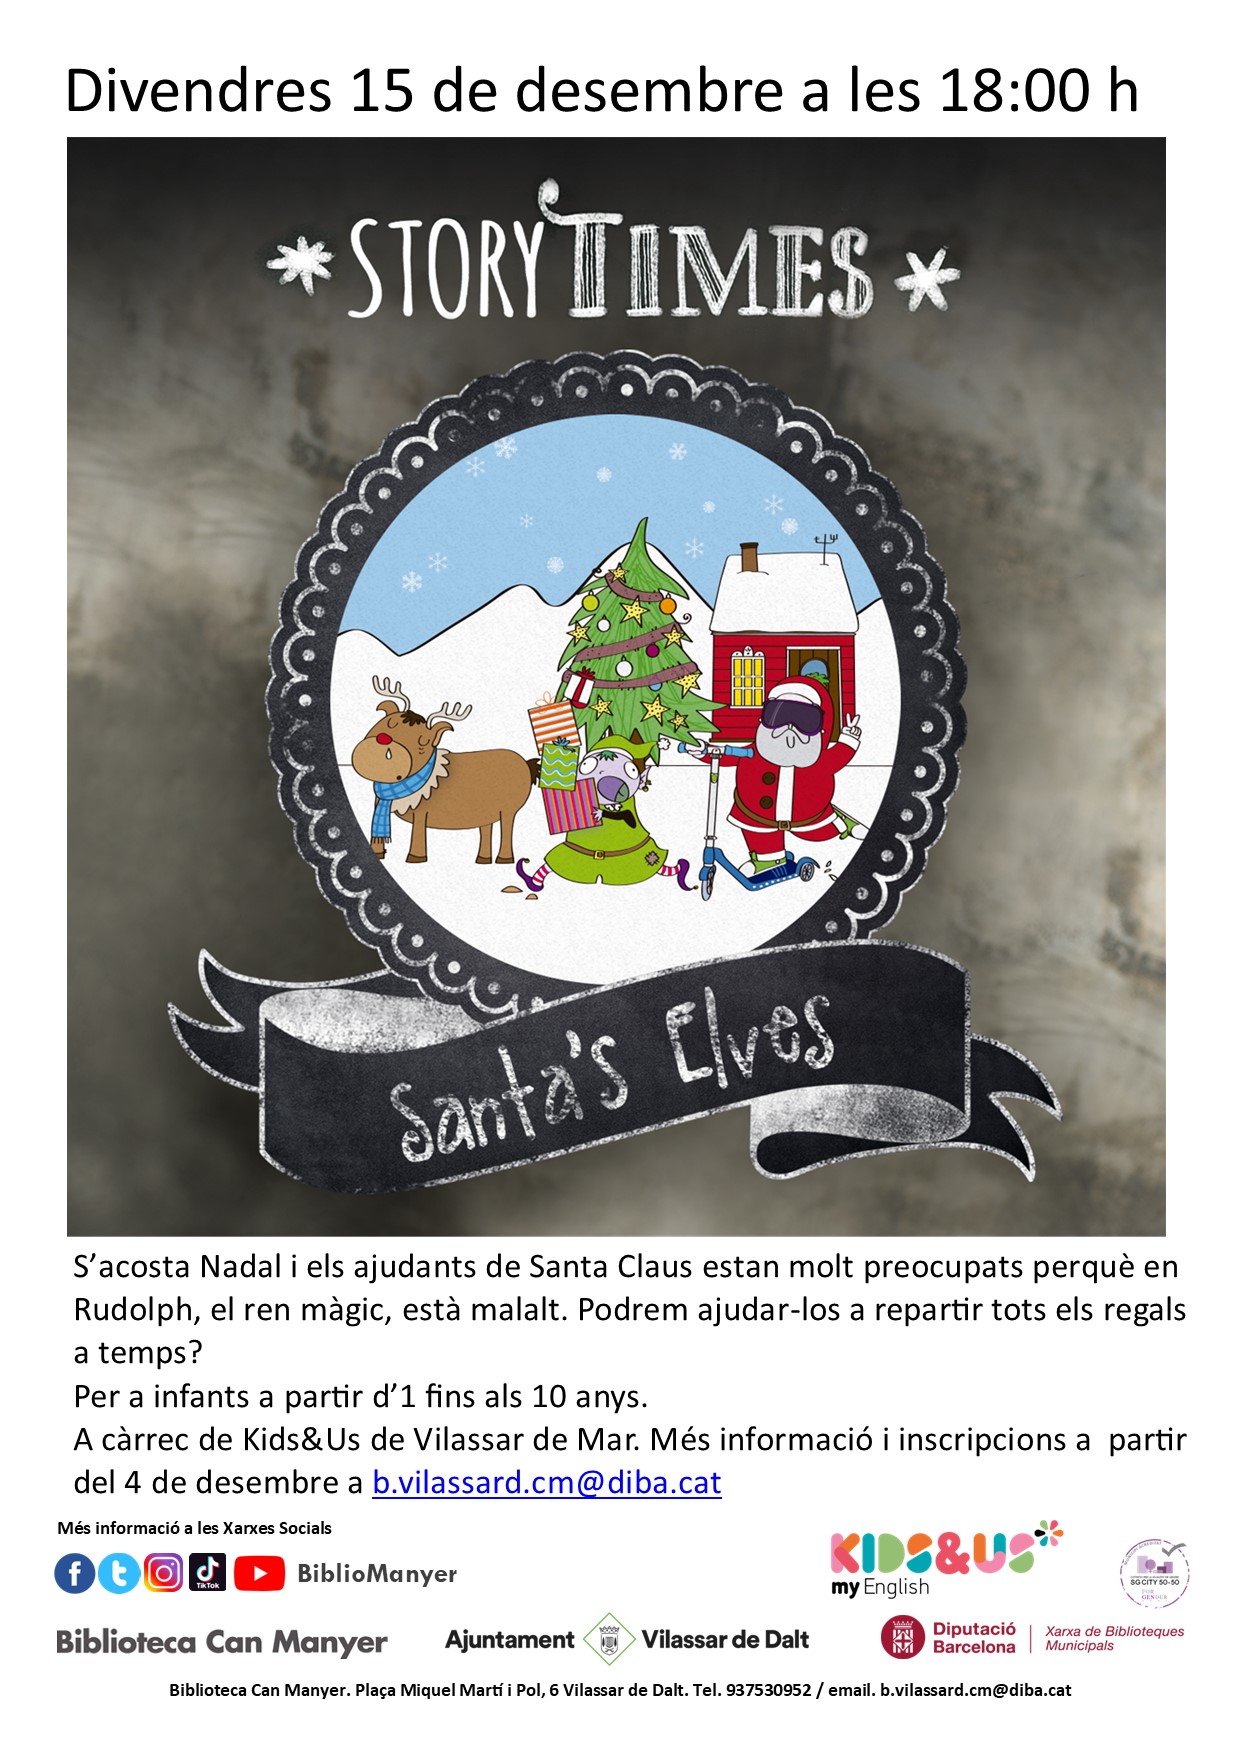 Storytimes 'Salta's elves'